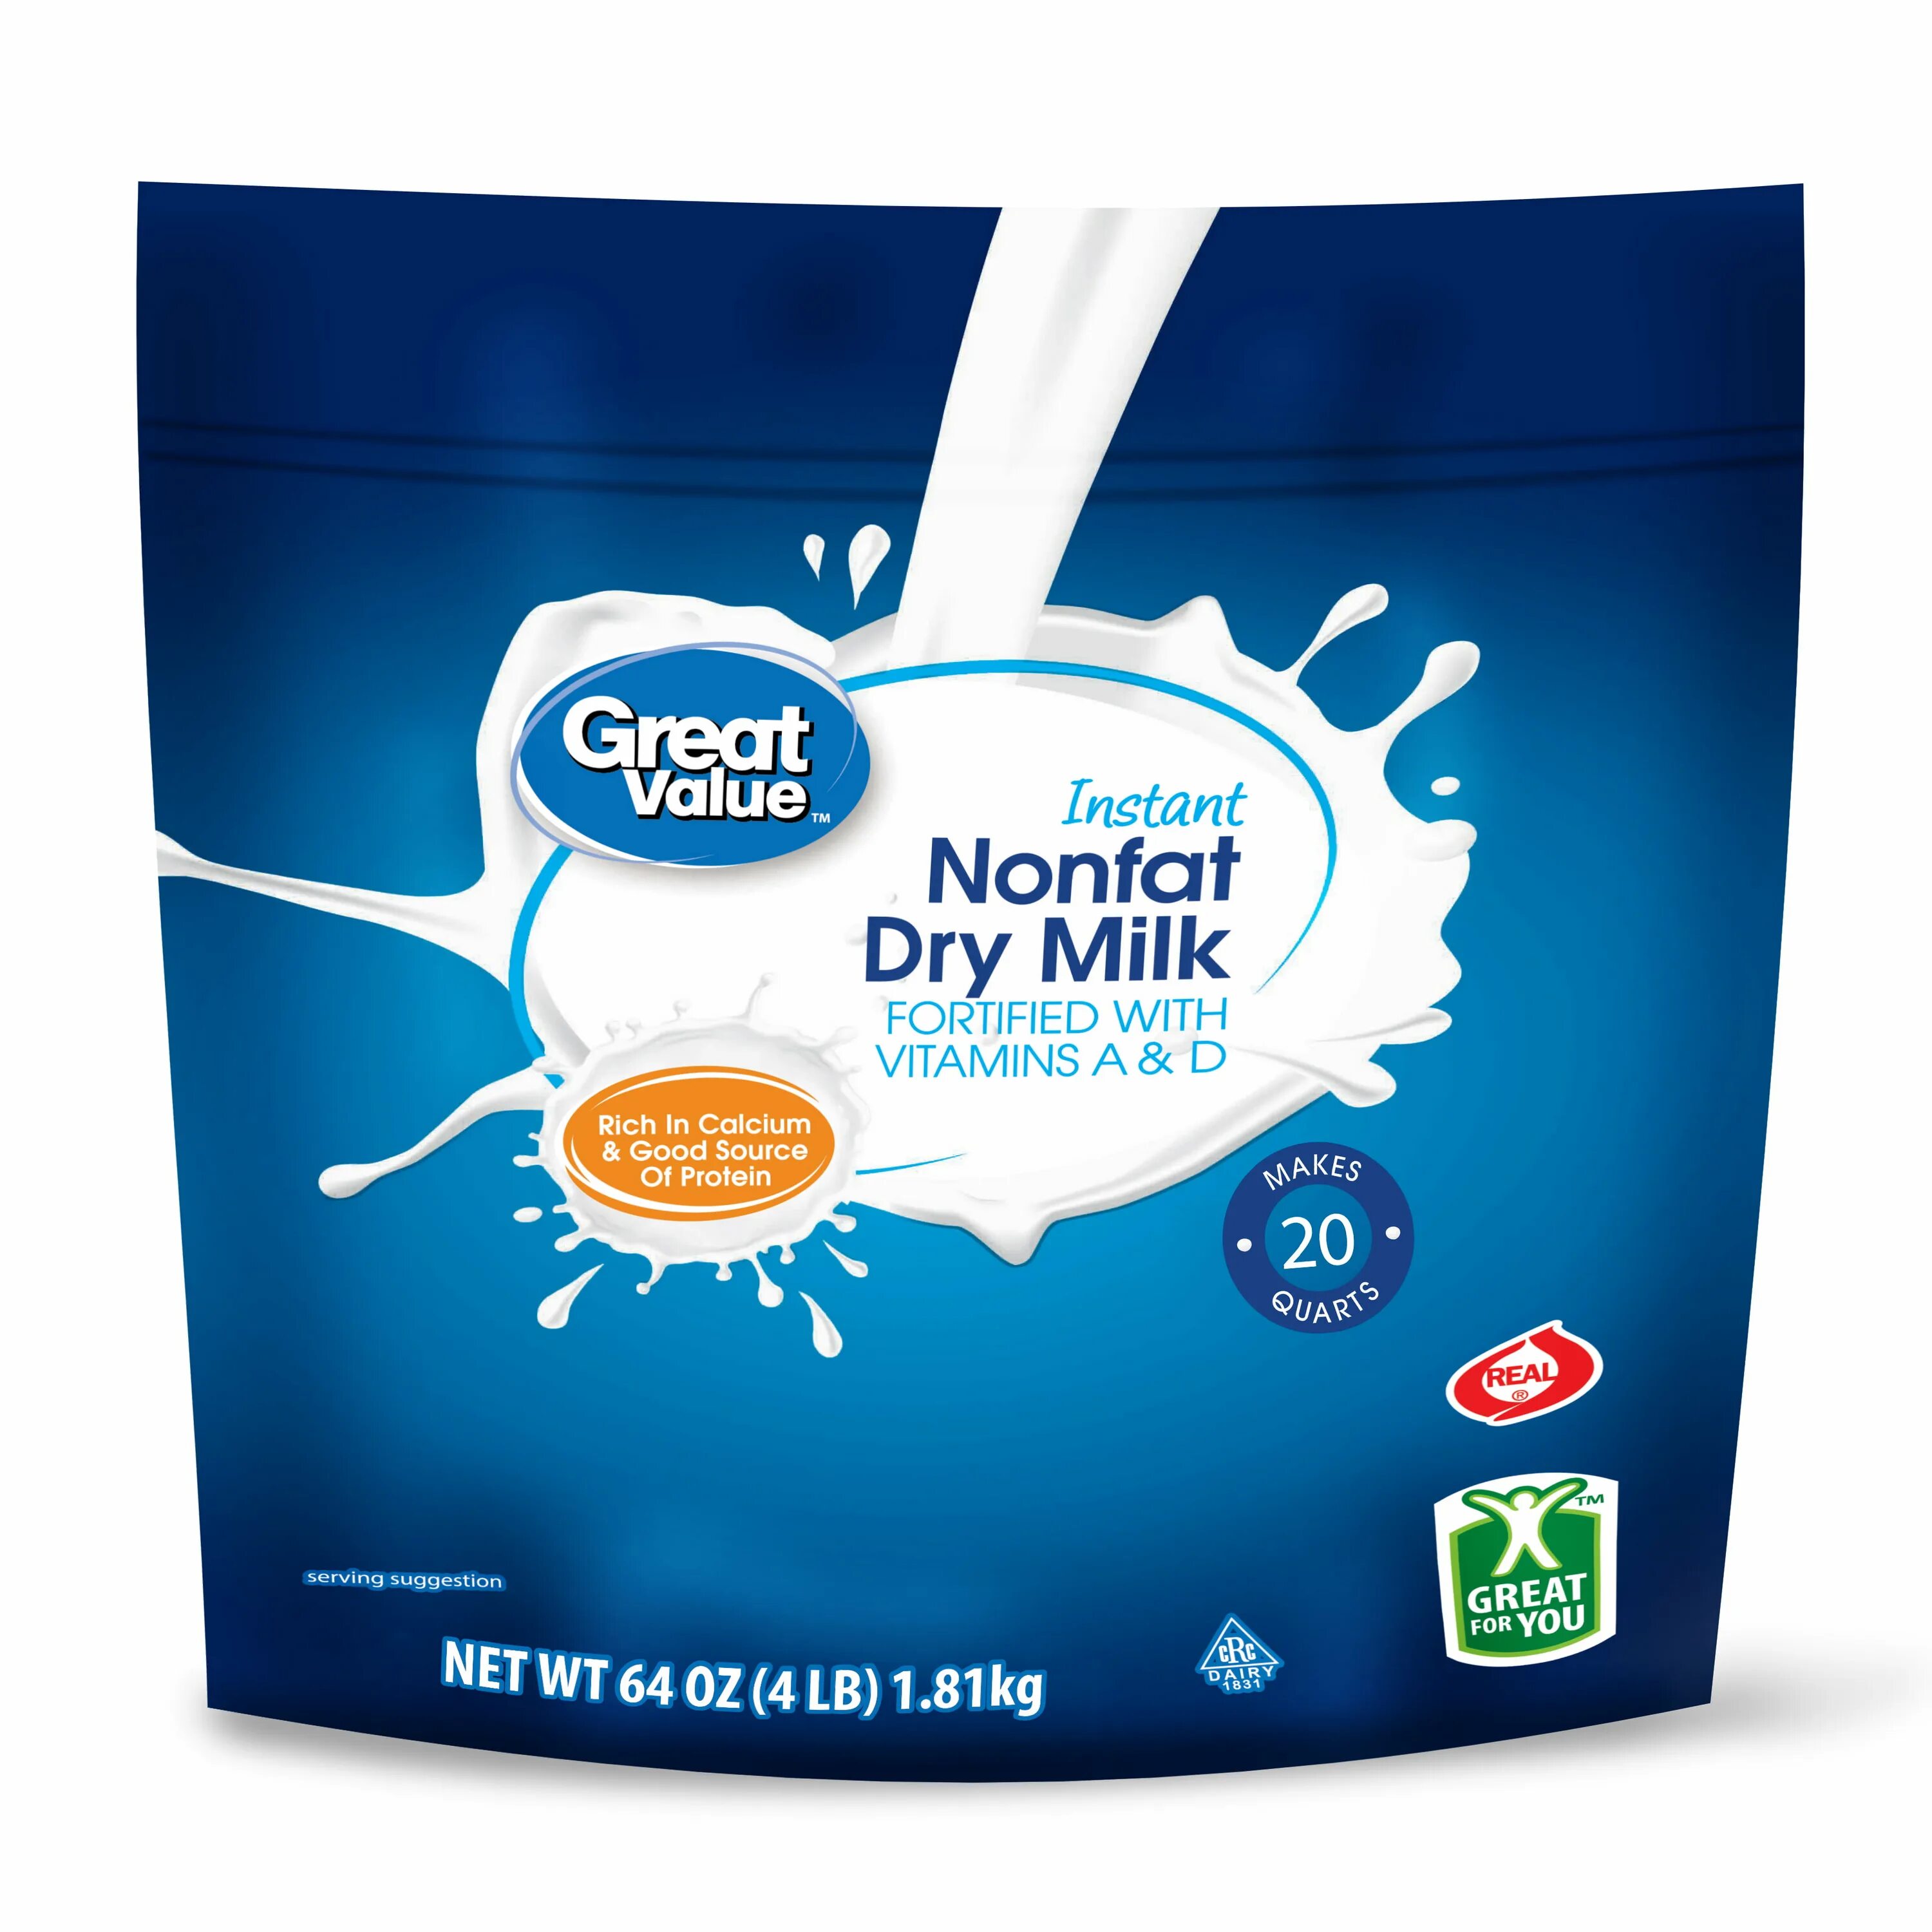 Miss circle r64 milk bed. Dry Milk products. Milk Vitamins. Instant Milk. Blue Powered молоко.